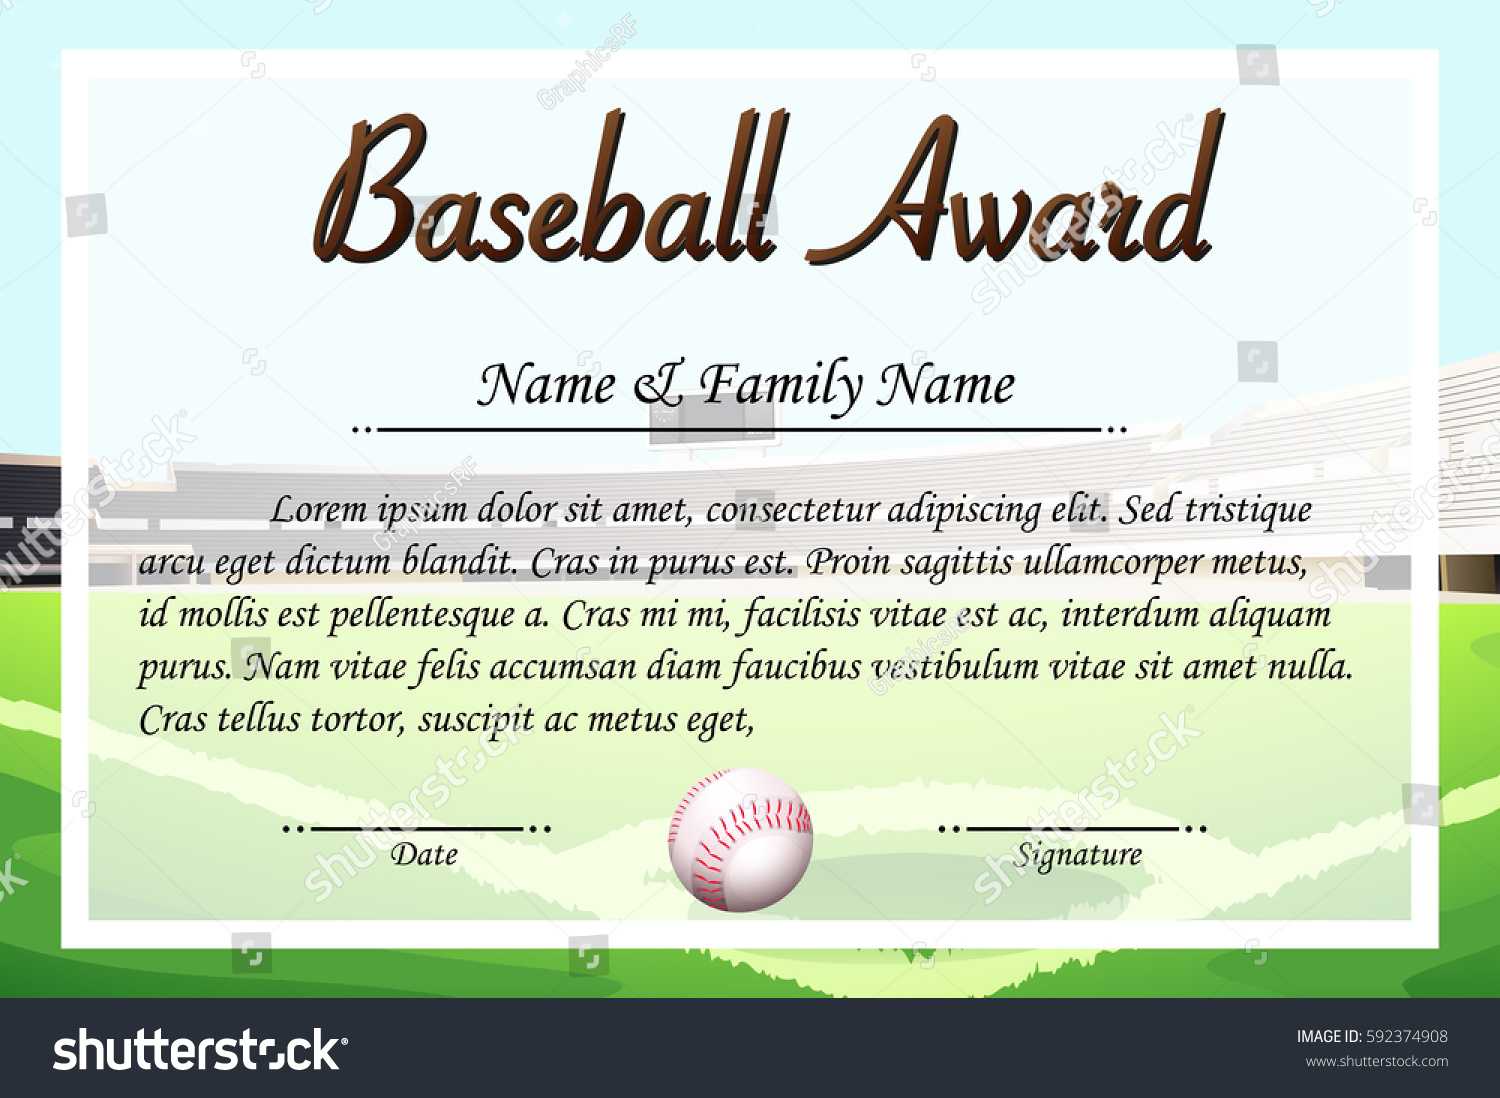 Certificate Template Baseball Award Illustration Stock Within Softball Award Certificate Template